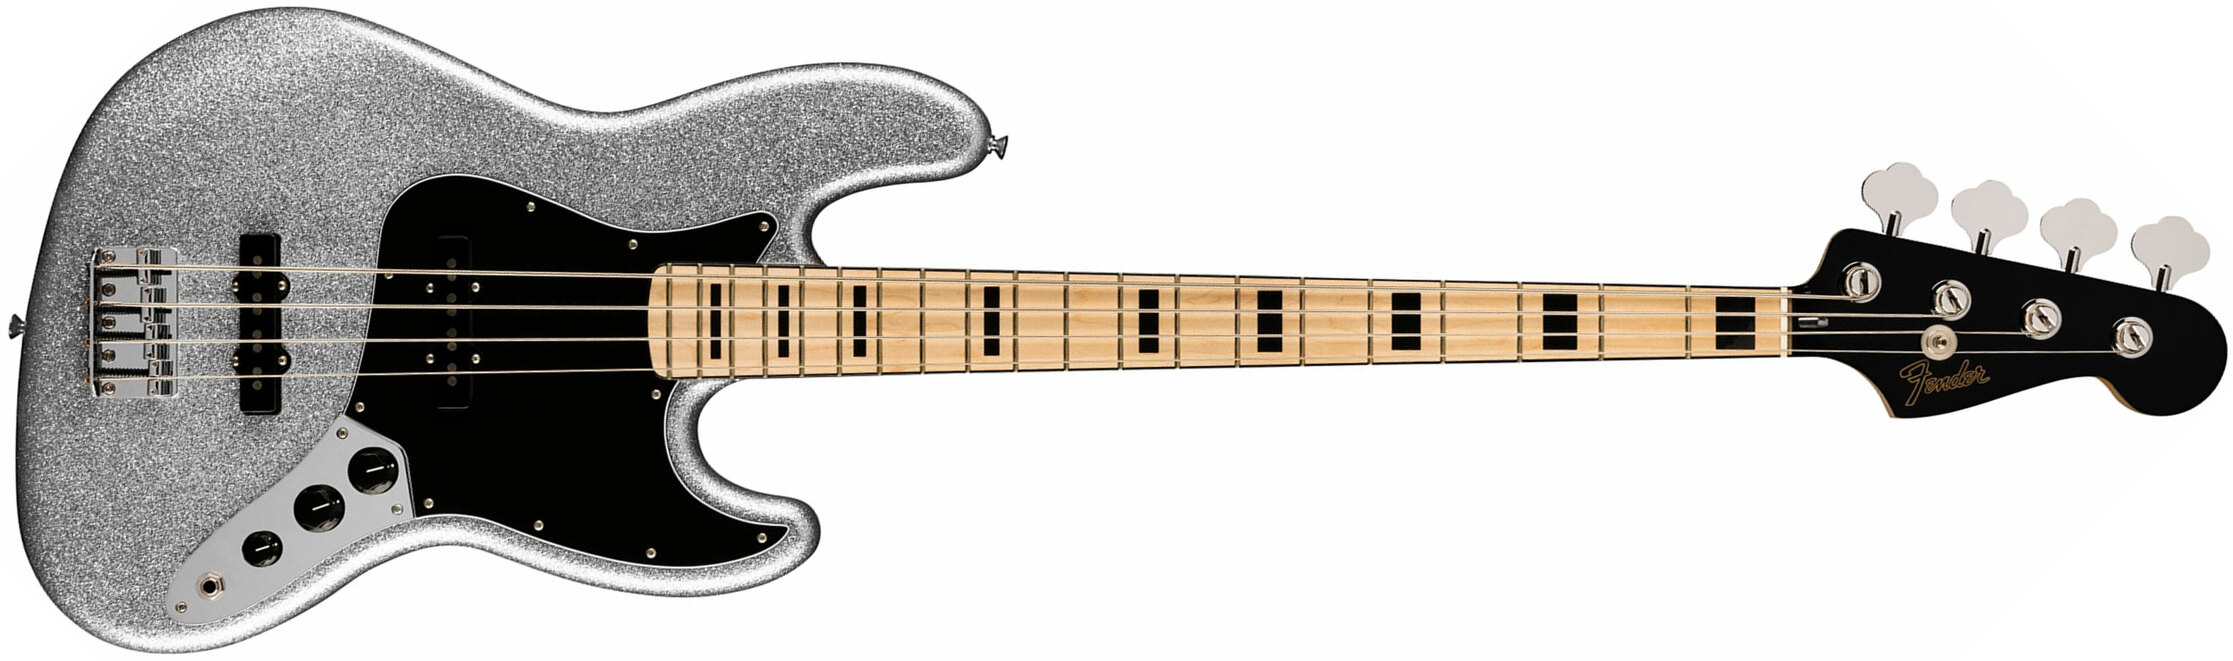 Fender Mikey Way Jazz Bass Ltd Signature Mex Mn - Silver Sparkle - Basse Électrique Solid Body - Main picture